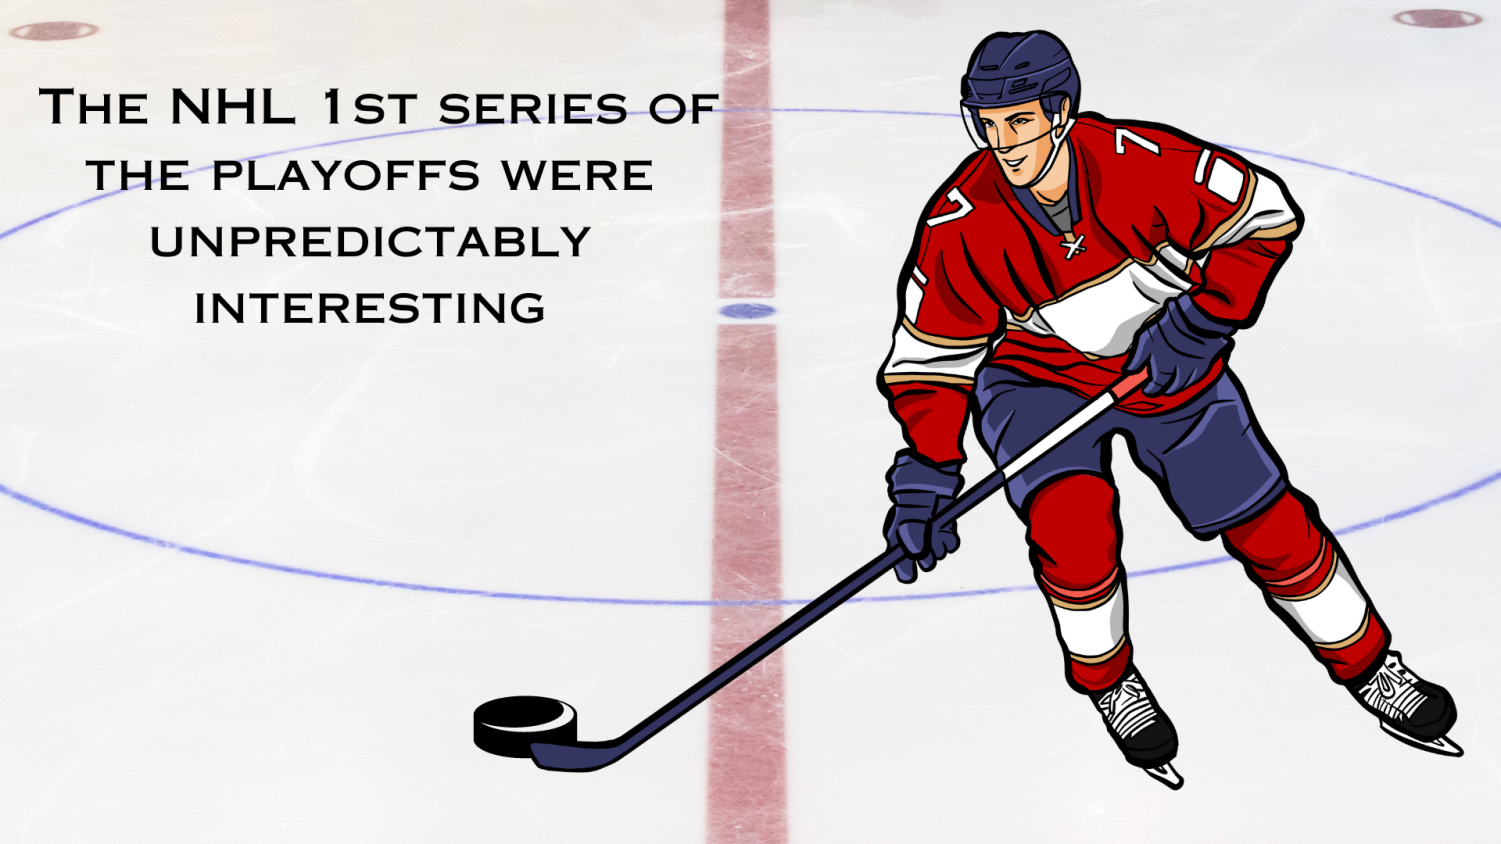 NHL playoffs: Devils eliminated on Fast's overtime goal